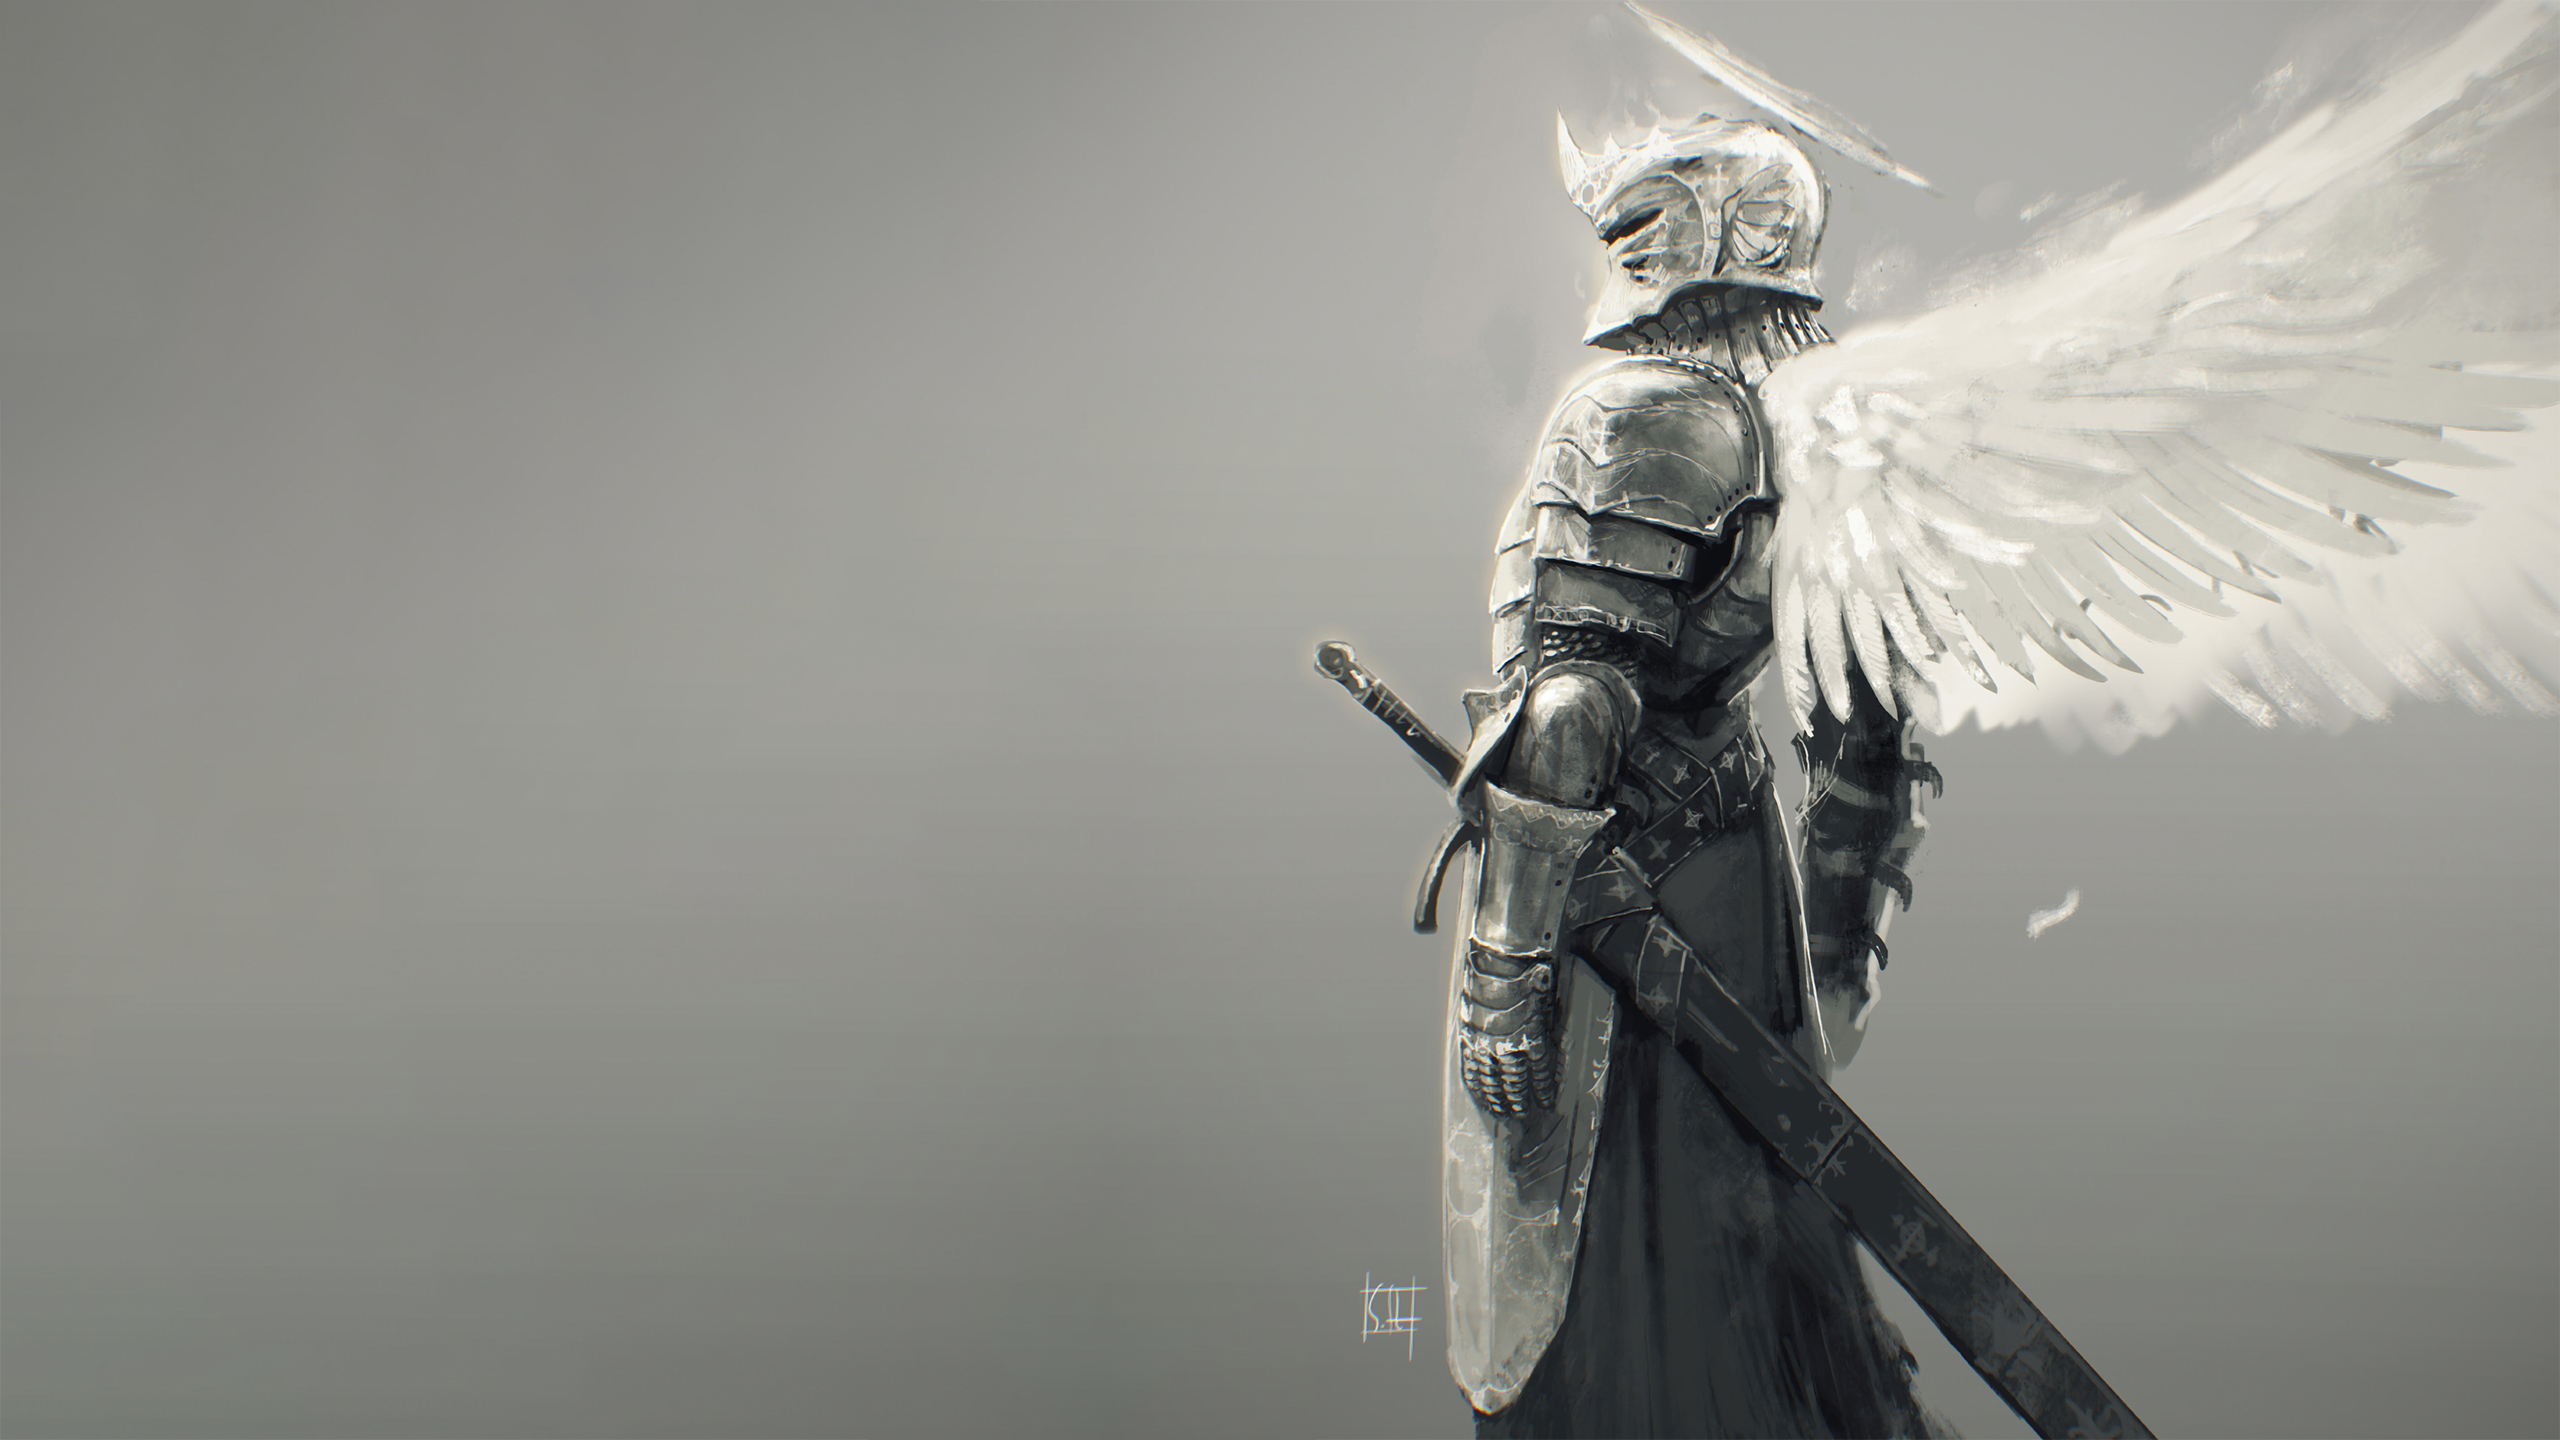 General 2560x1440 fantasy armor fantasy art sword knight angel wings armor armored wings DeviantArt artwork gray background